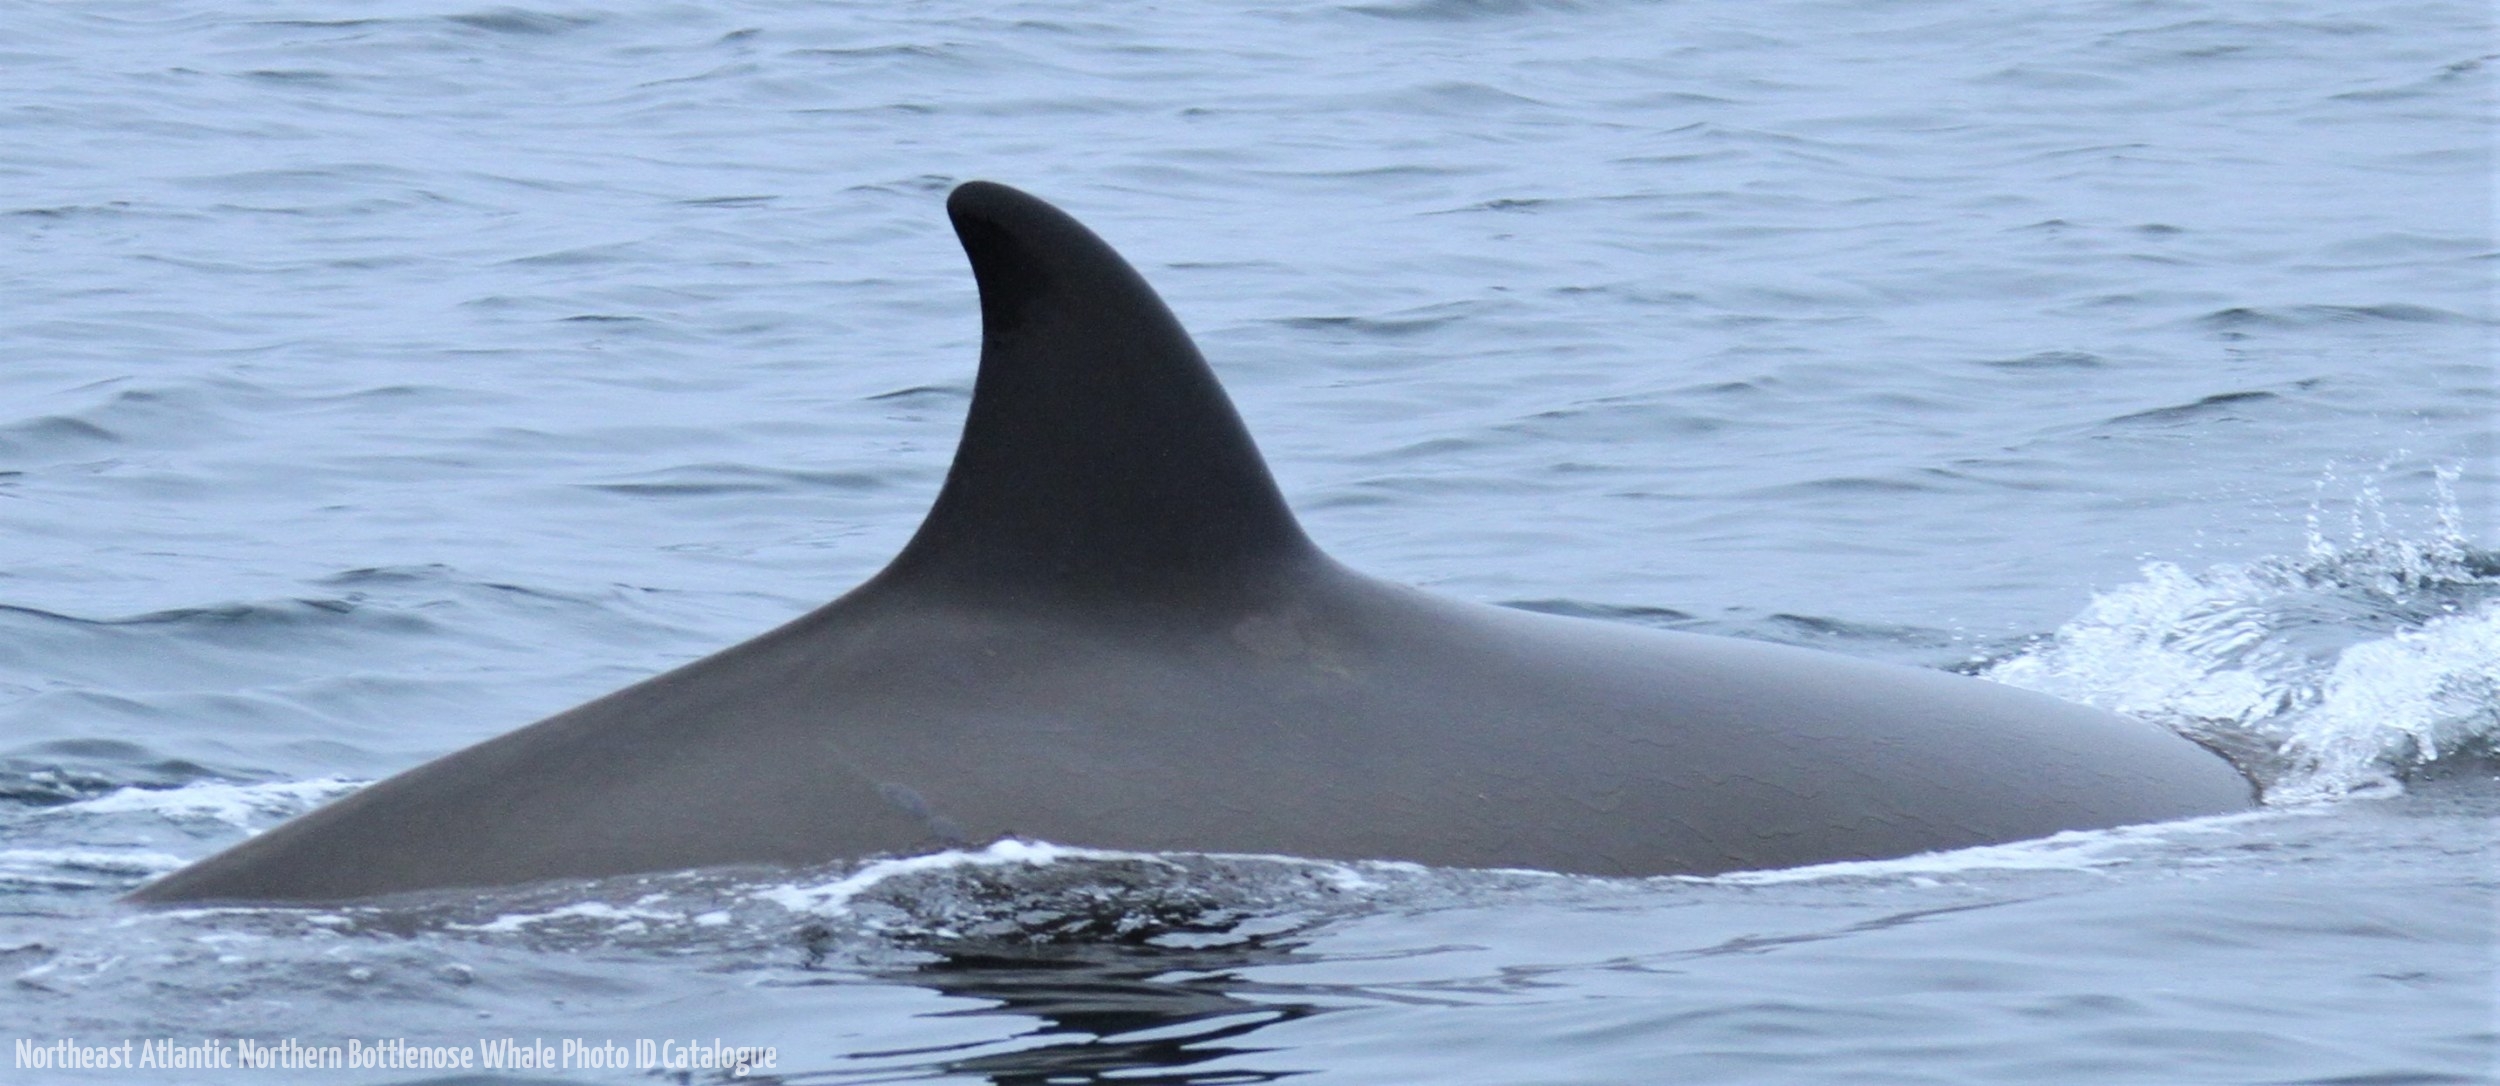 Whale ID: 0271,  Date taken: 01-07-2013,  Photographer: Paul H. Ensor